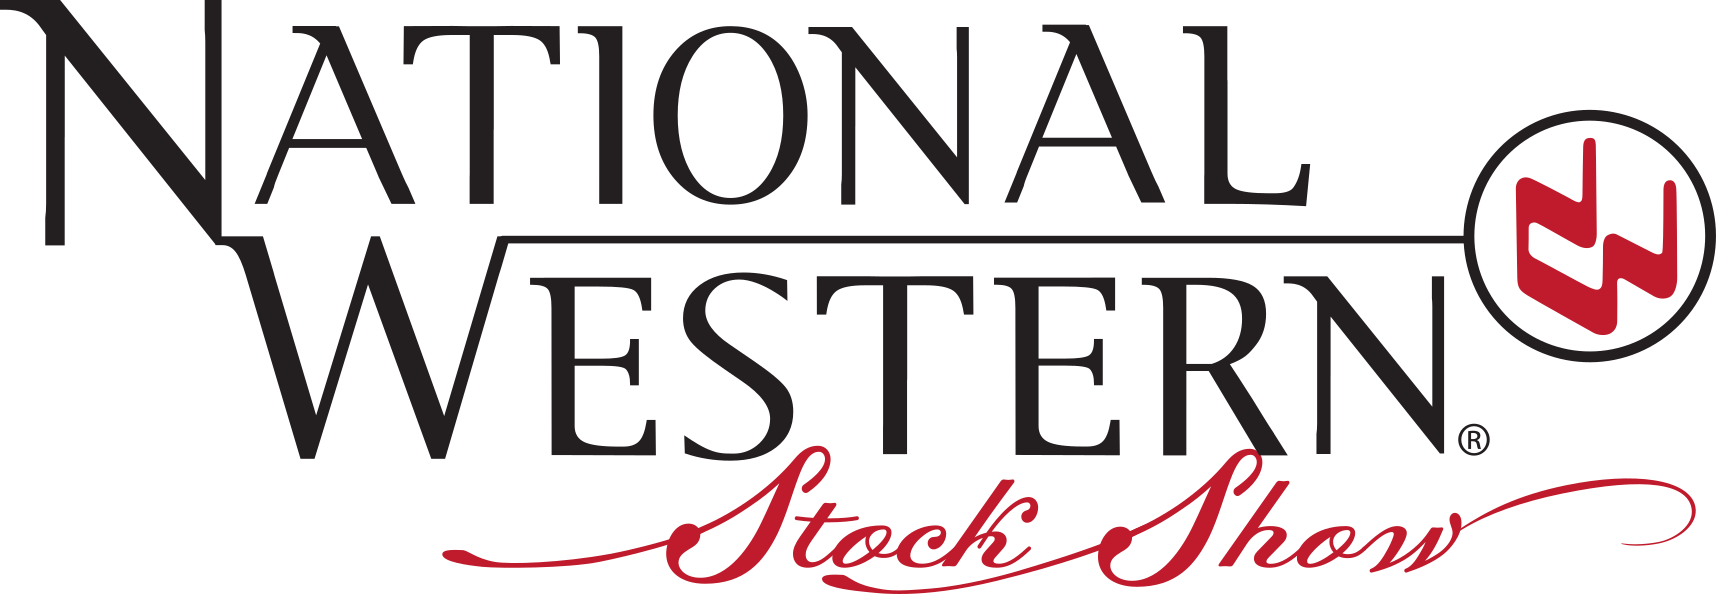 National western stock show logo